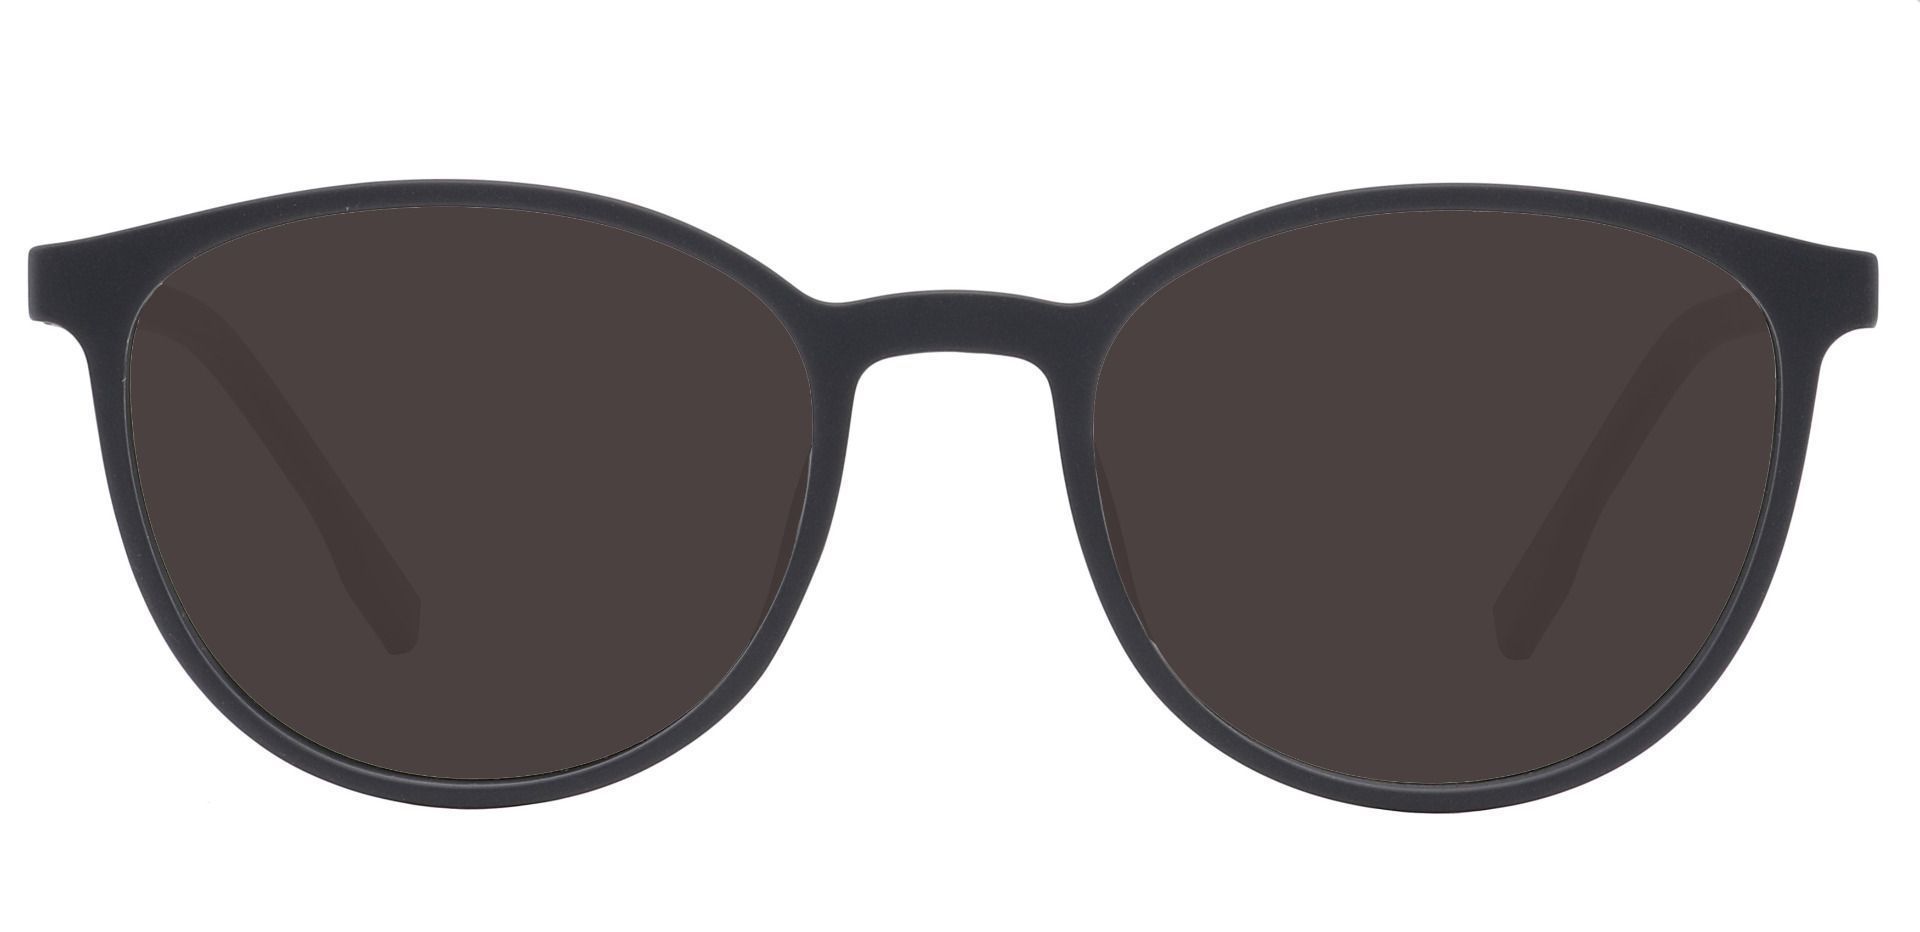 Bay Round Prescription Sunglasses - Black Frame With Gray Lenses